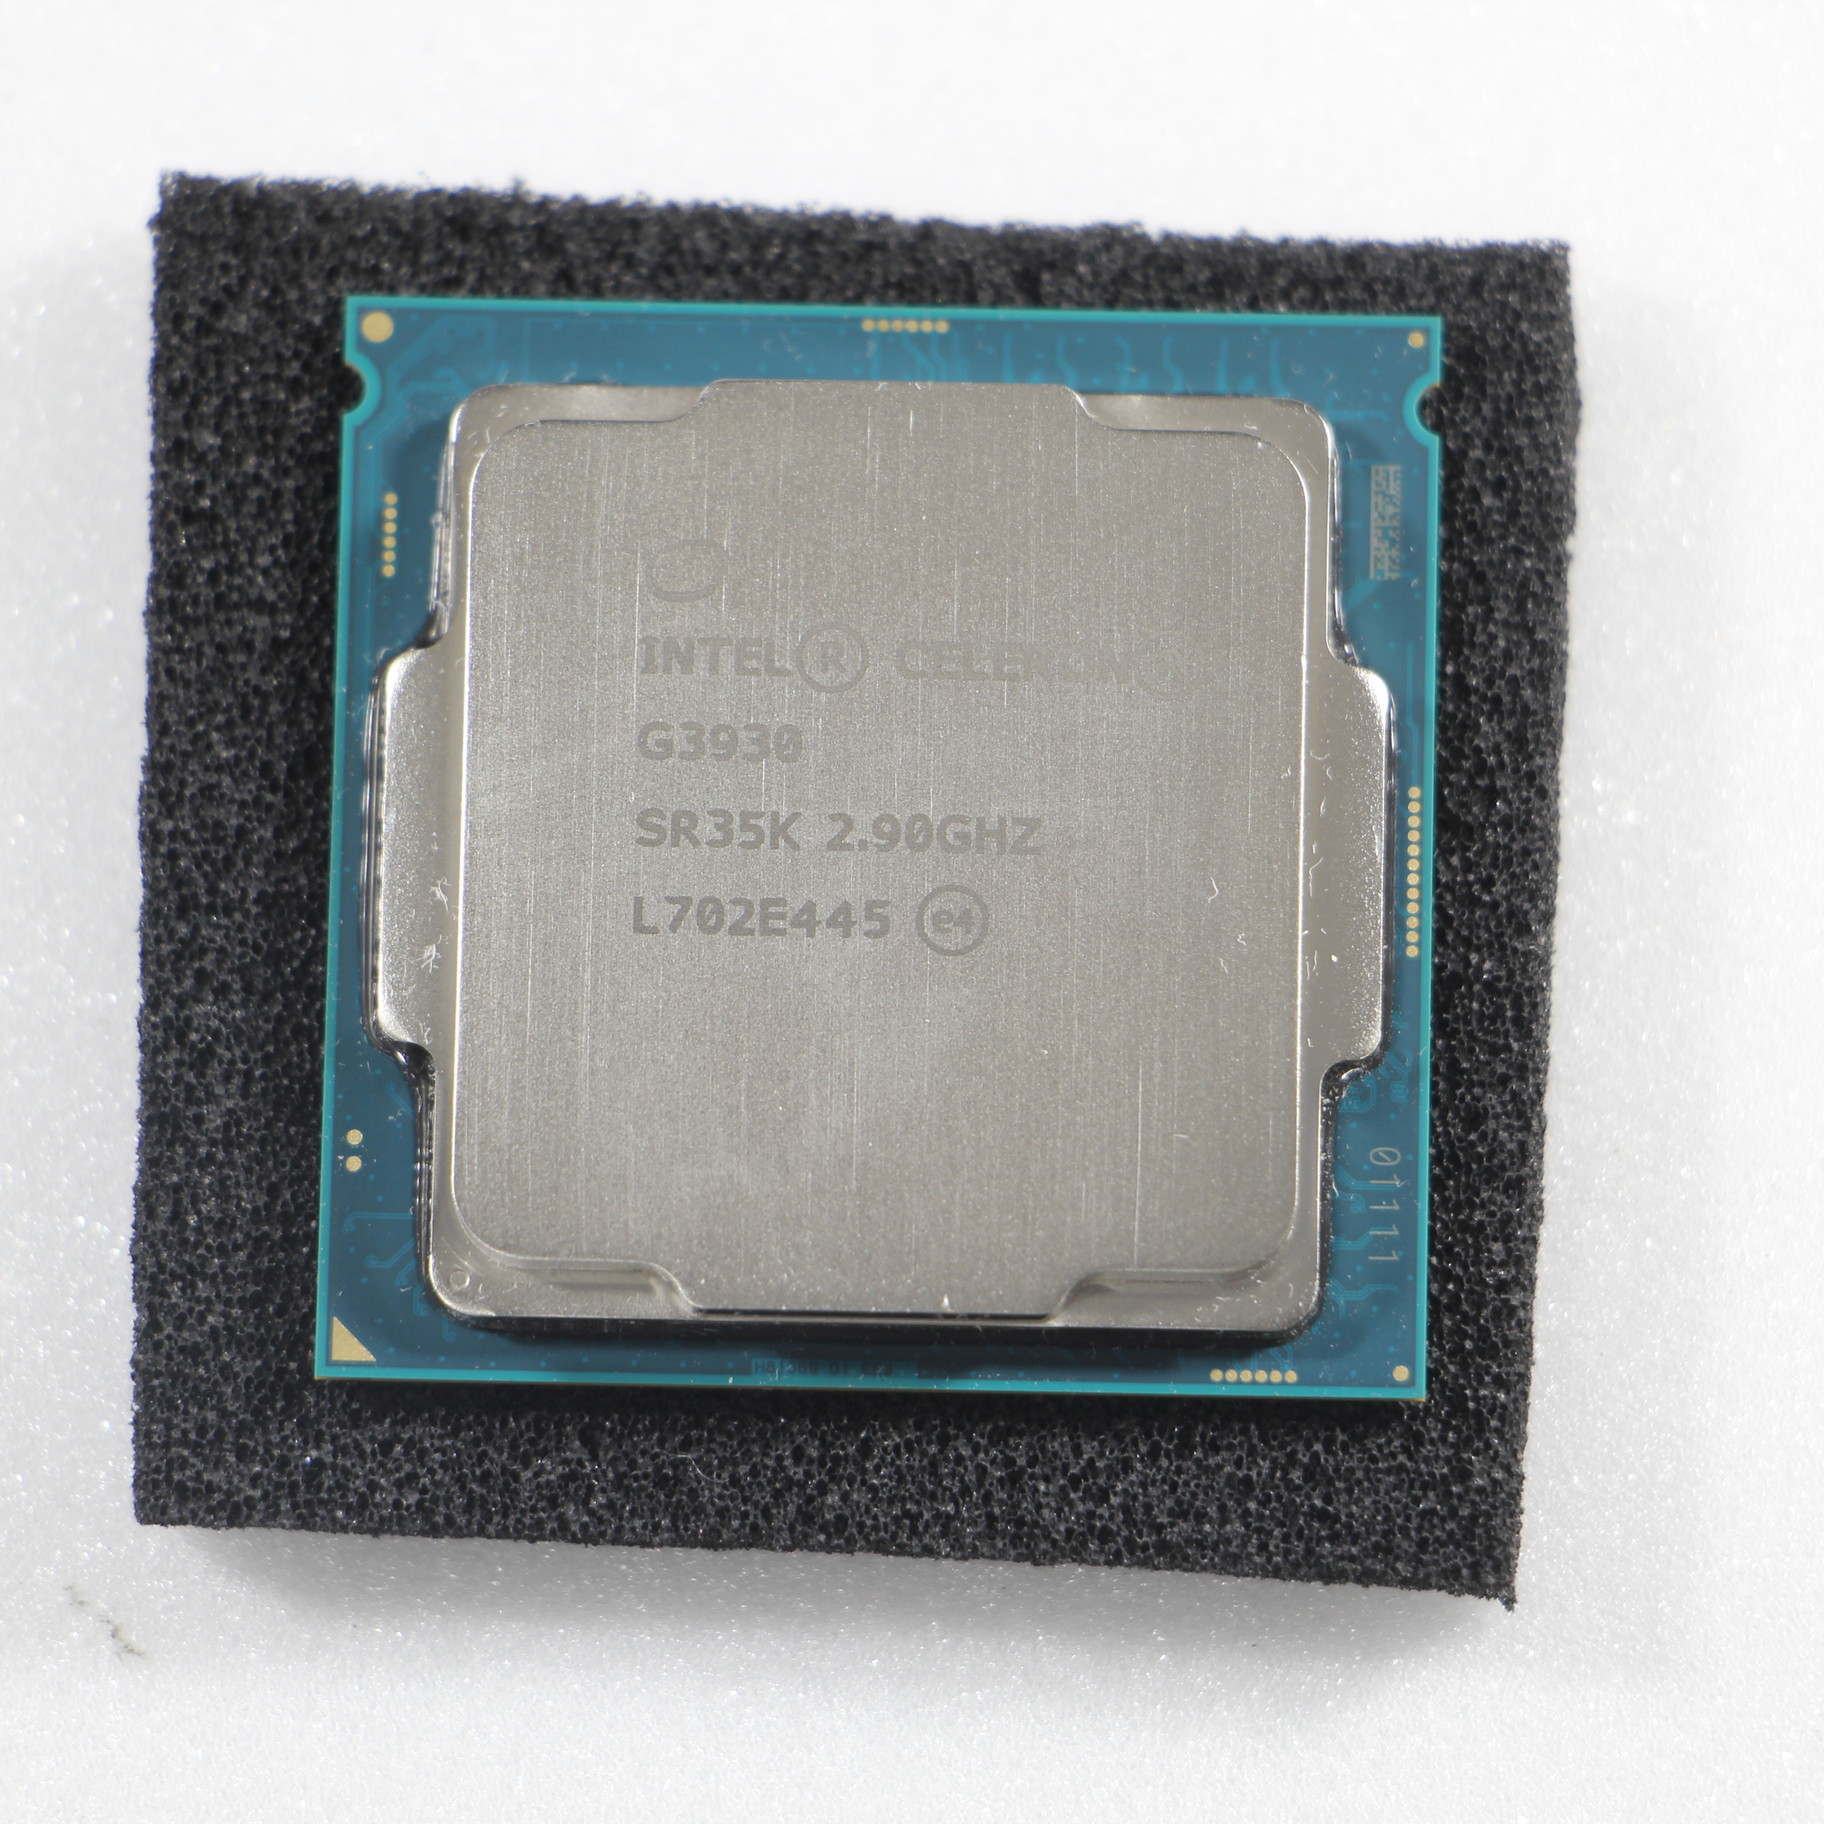 CPU CELERON G3930 2.9GHz LGA1151